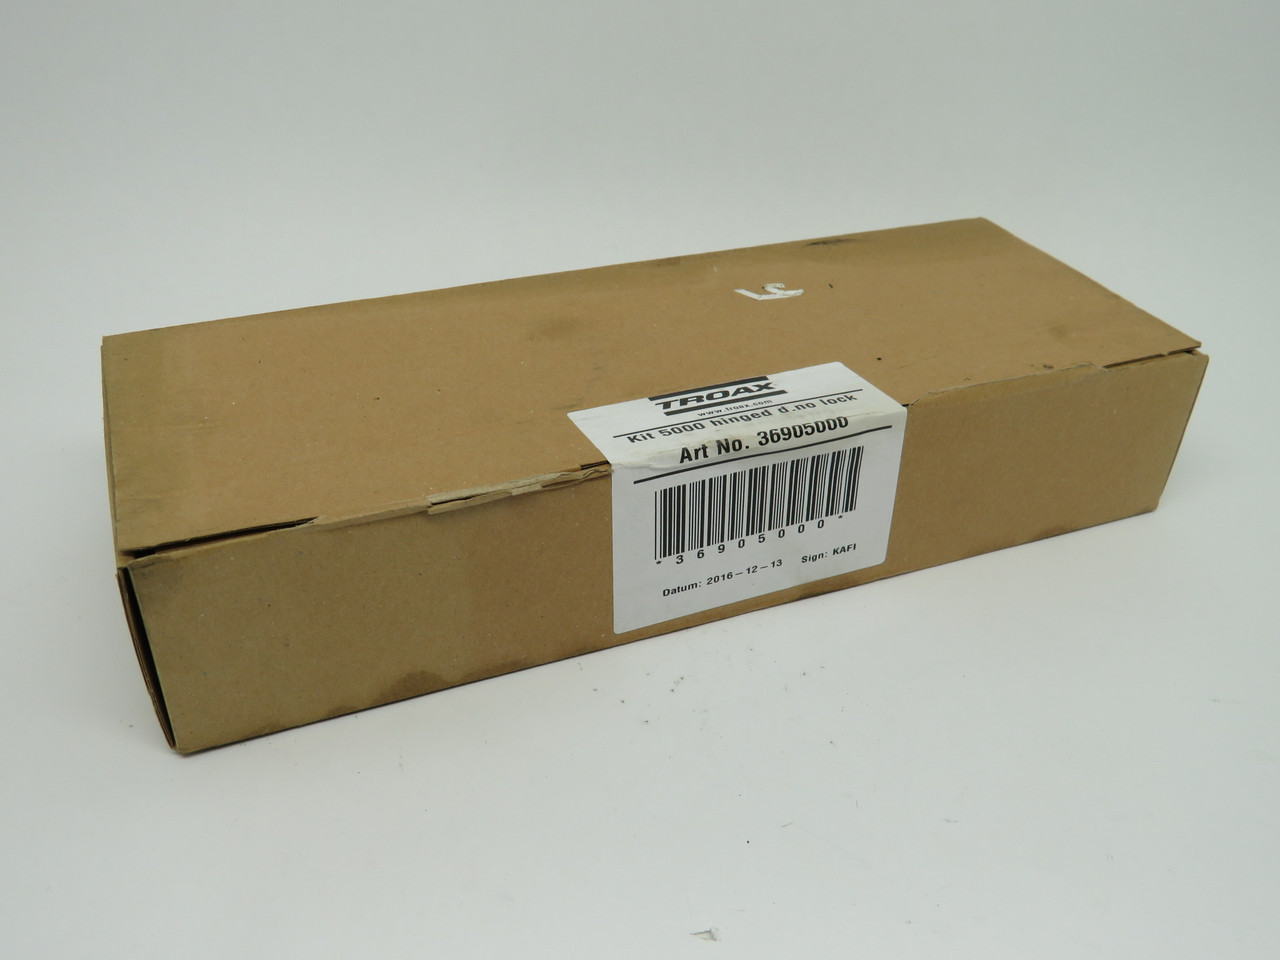 Troax 36905000 Hinged Door Kit for Single Hinged Door No Lock SEALED BOX NEW